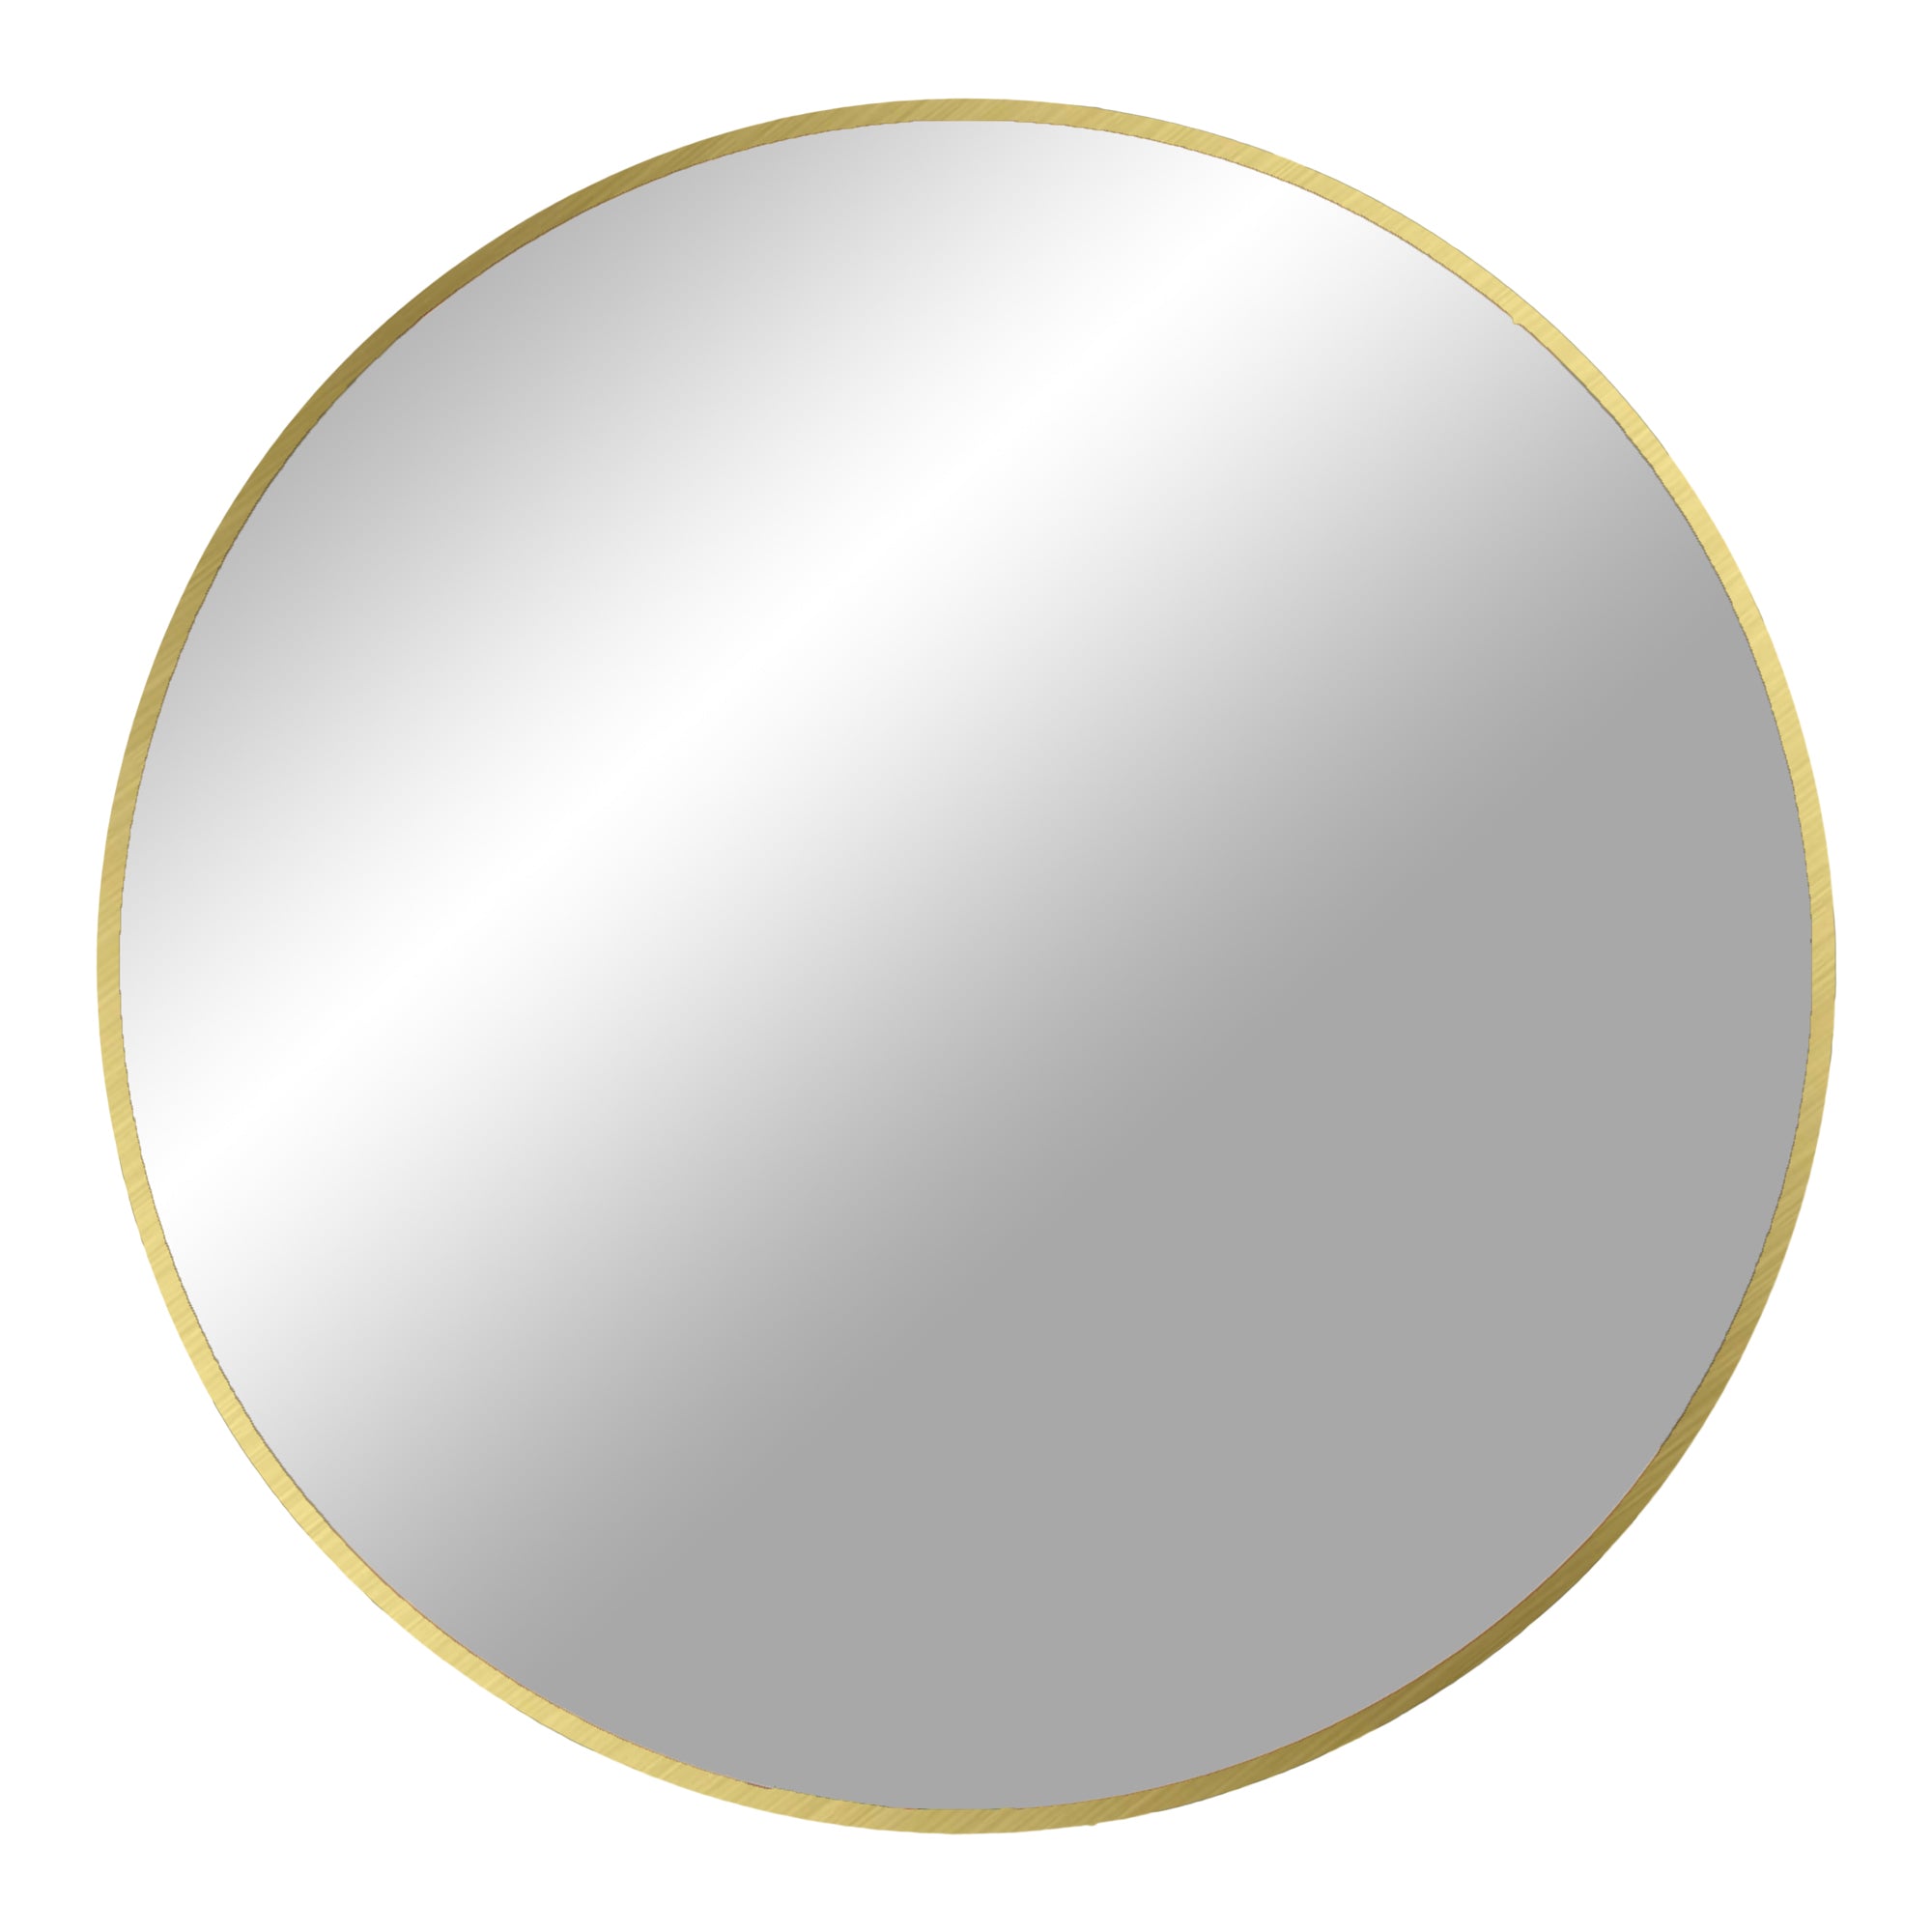 12: Madrid Spejl - Spejl i aluminium, messing look, Ø80 cm